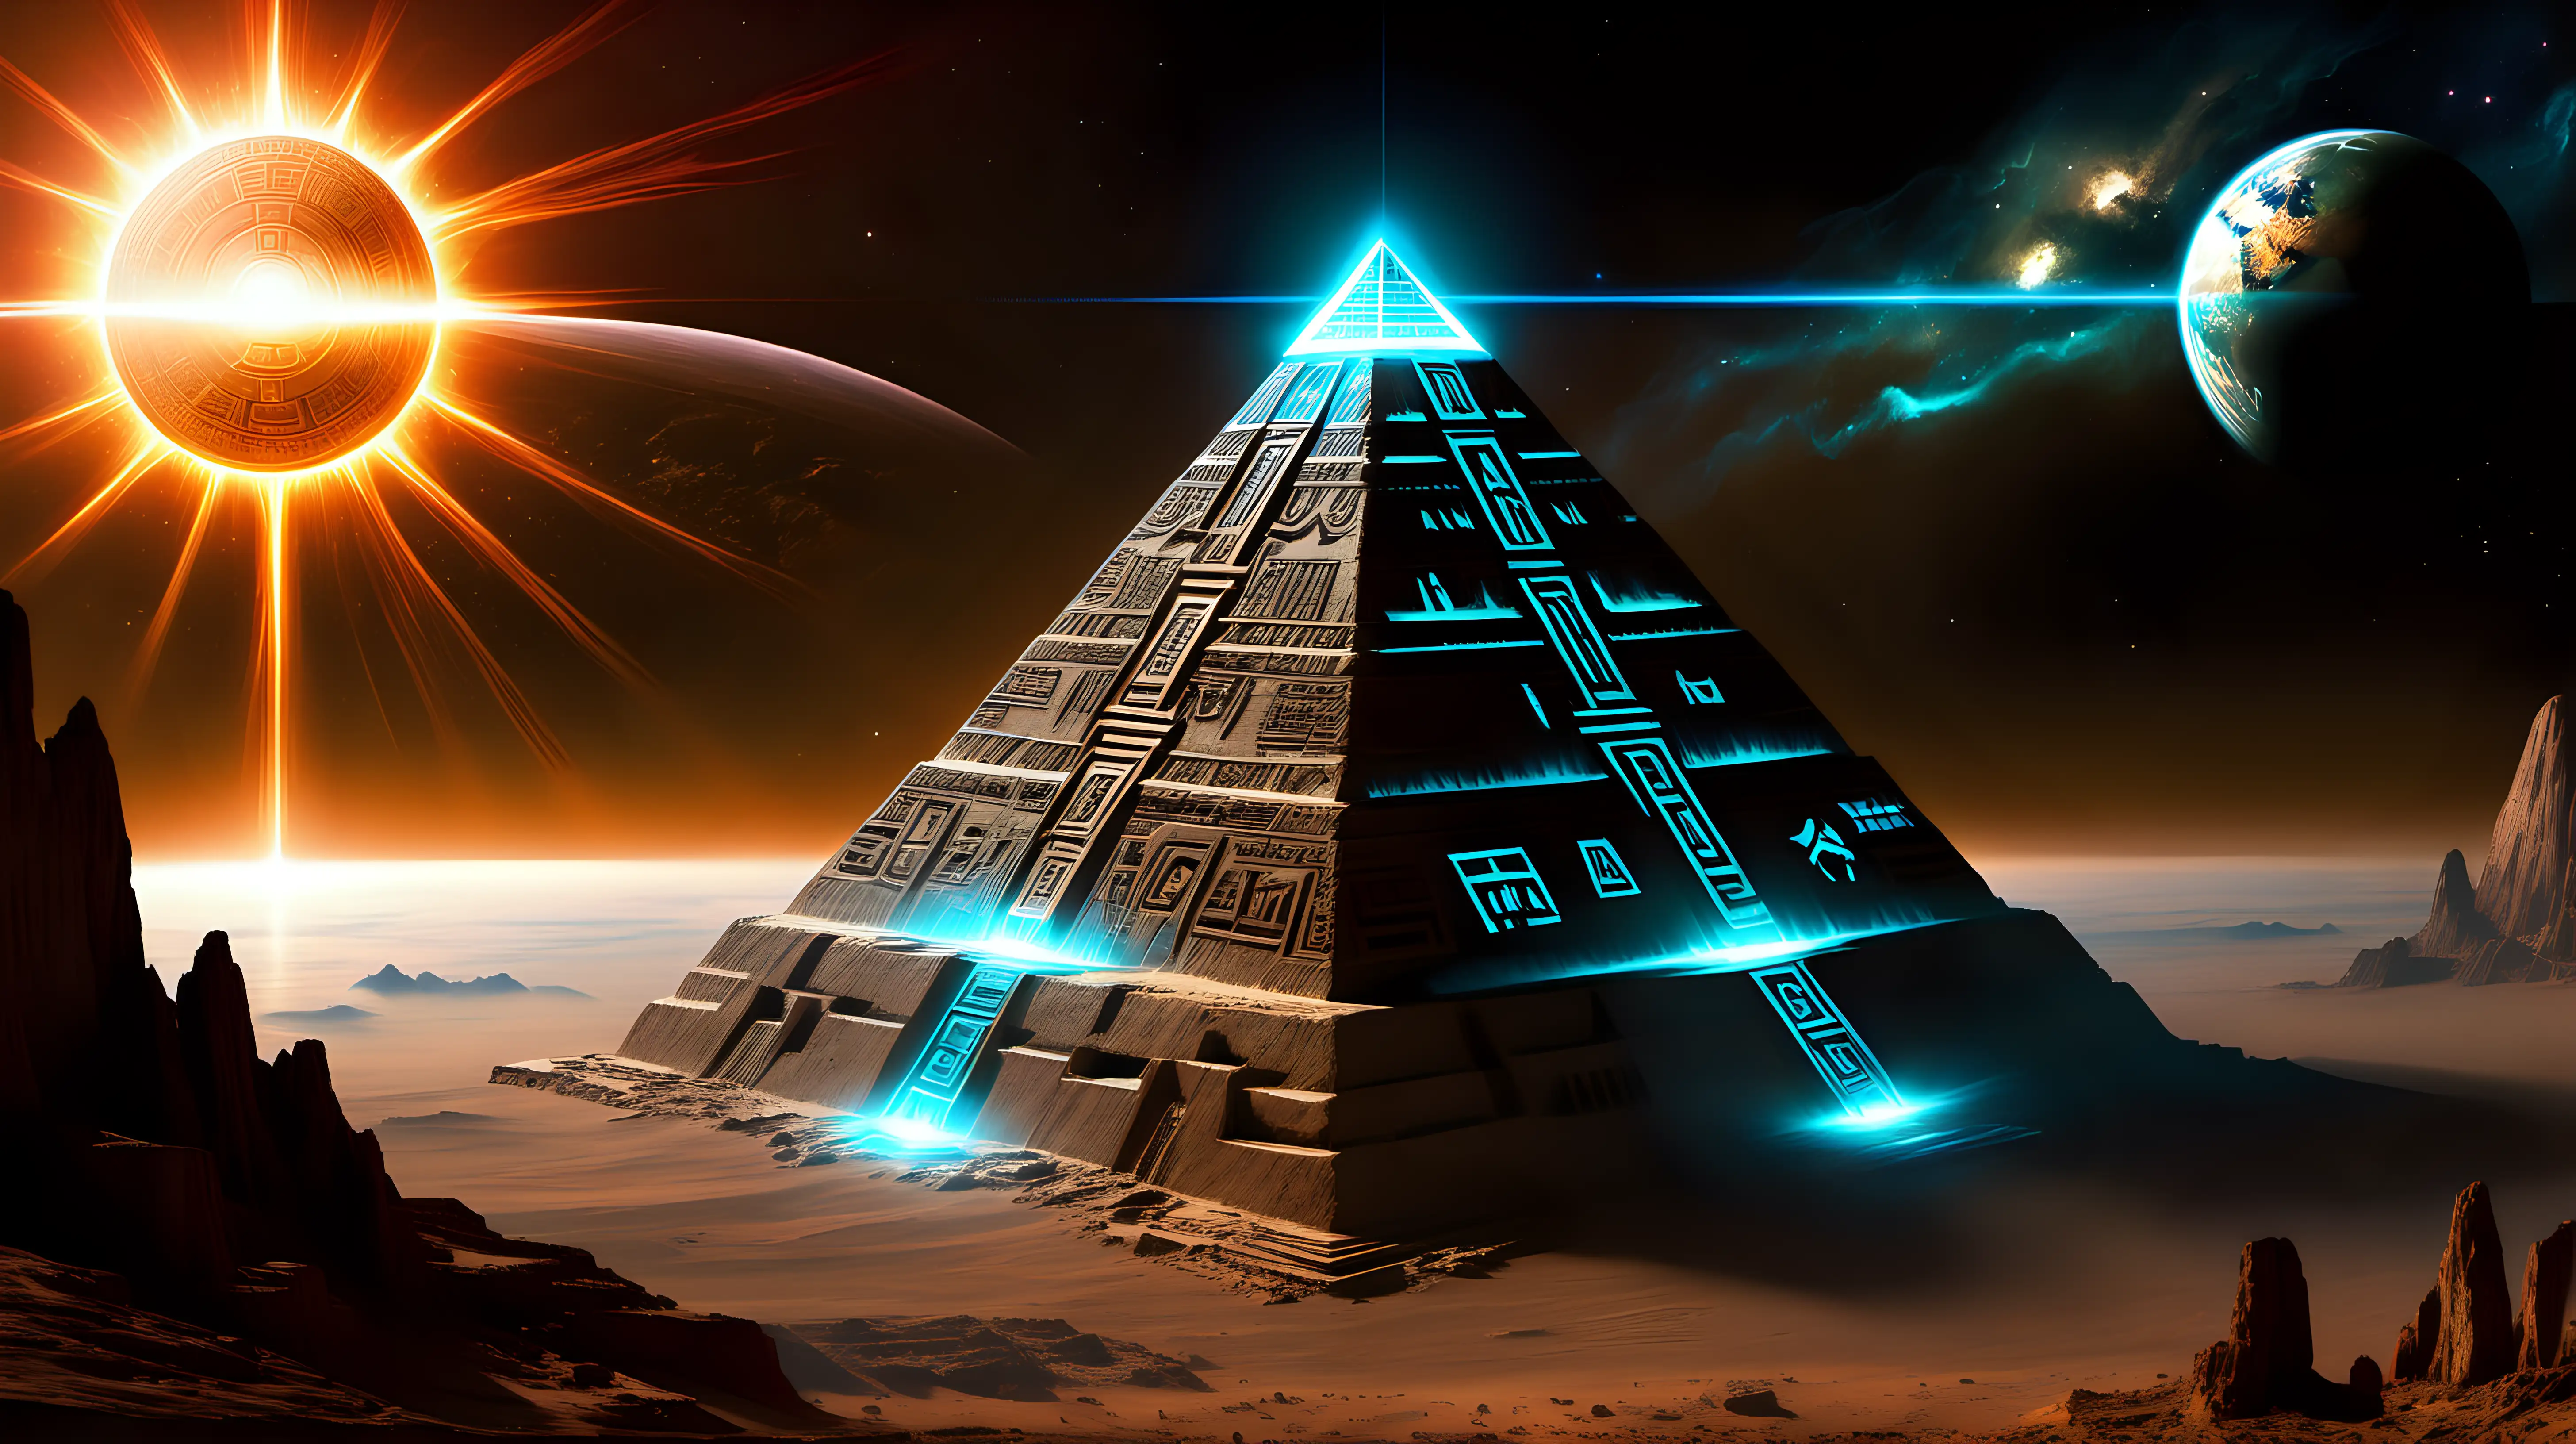 Mystical PyramidShaped Alien Vessel Descending with Glowing Hieroglyphics